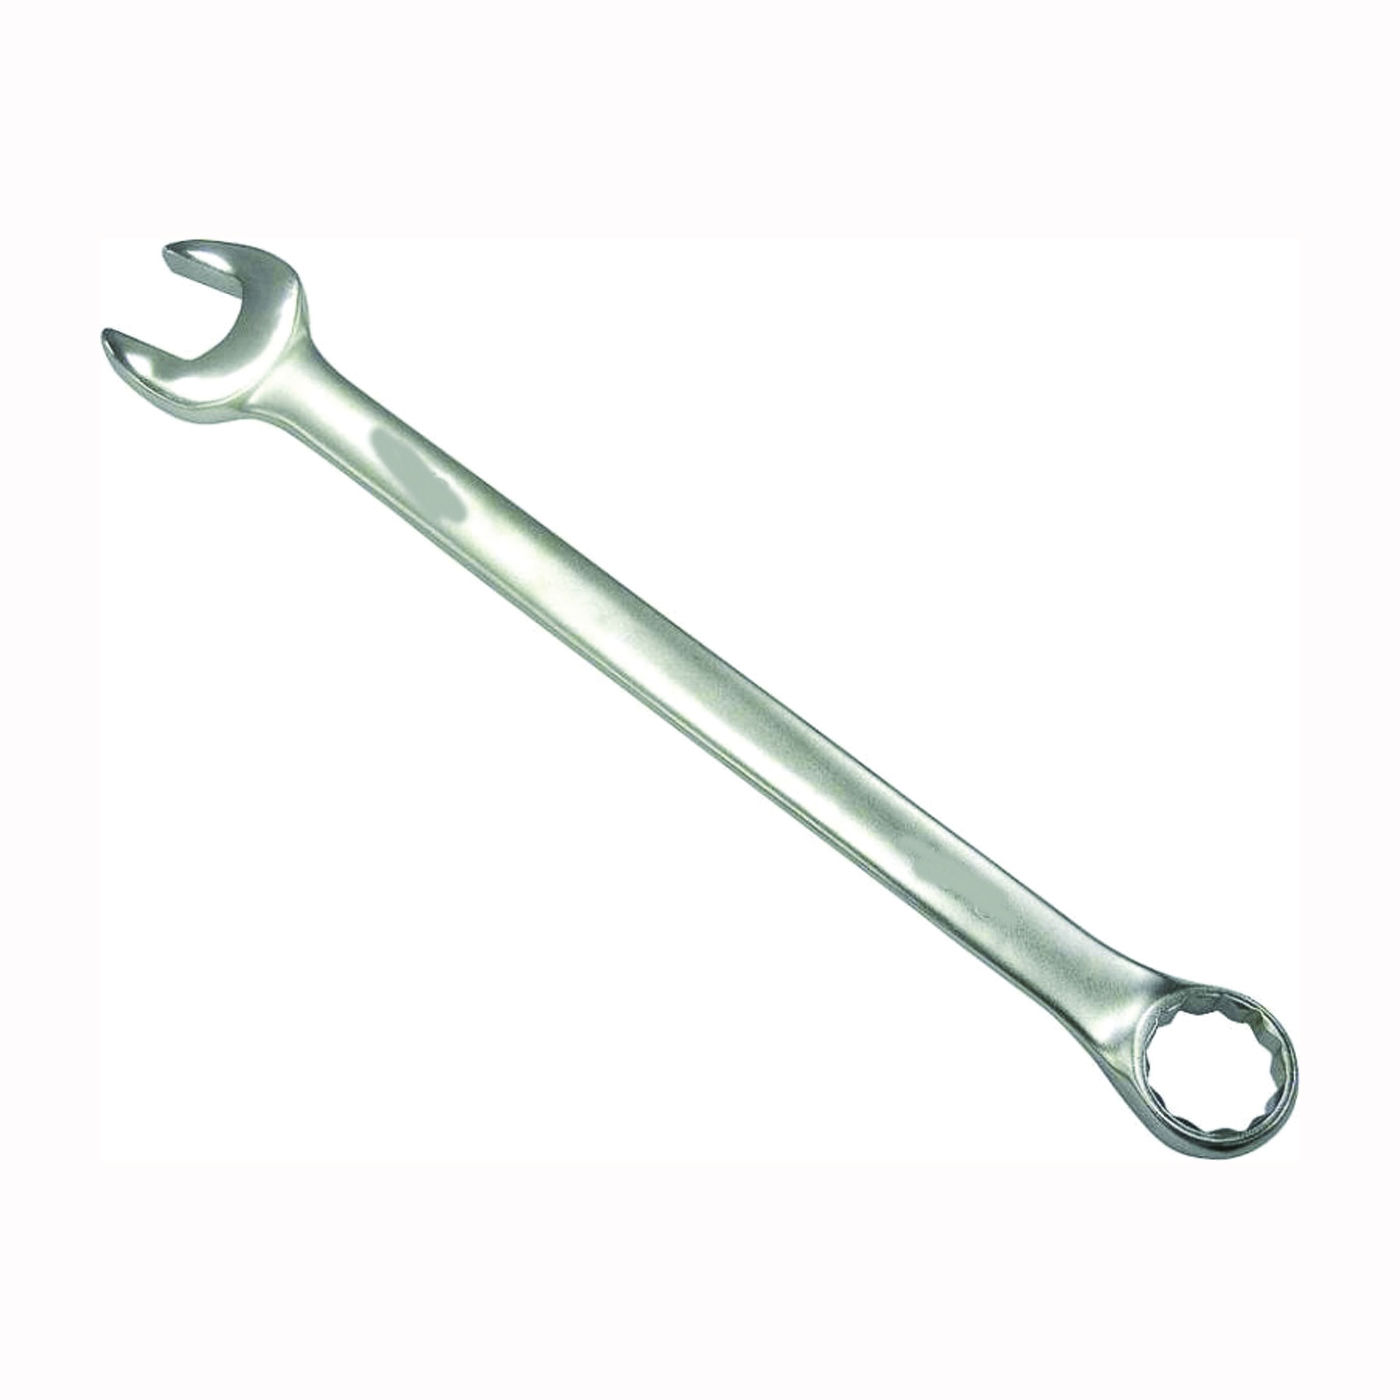 Vulcan MT1-7/8 Combination Wrench, SAE, 1-7/8 in Head, Chrome Vanadium Steel - 1